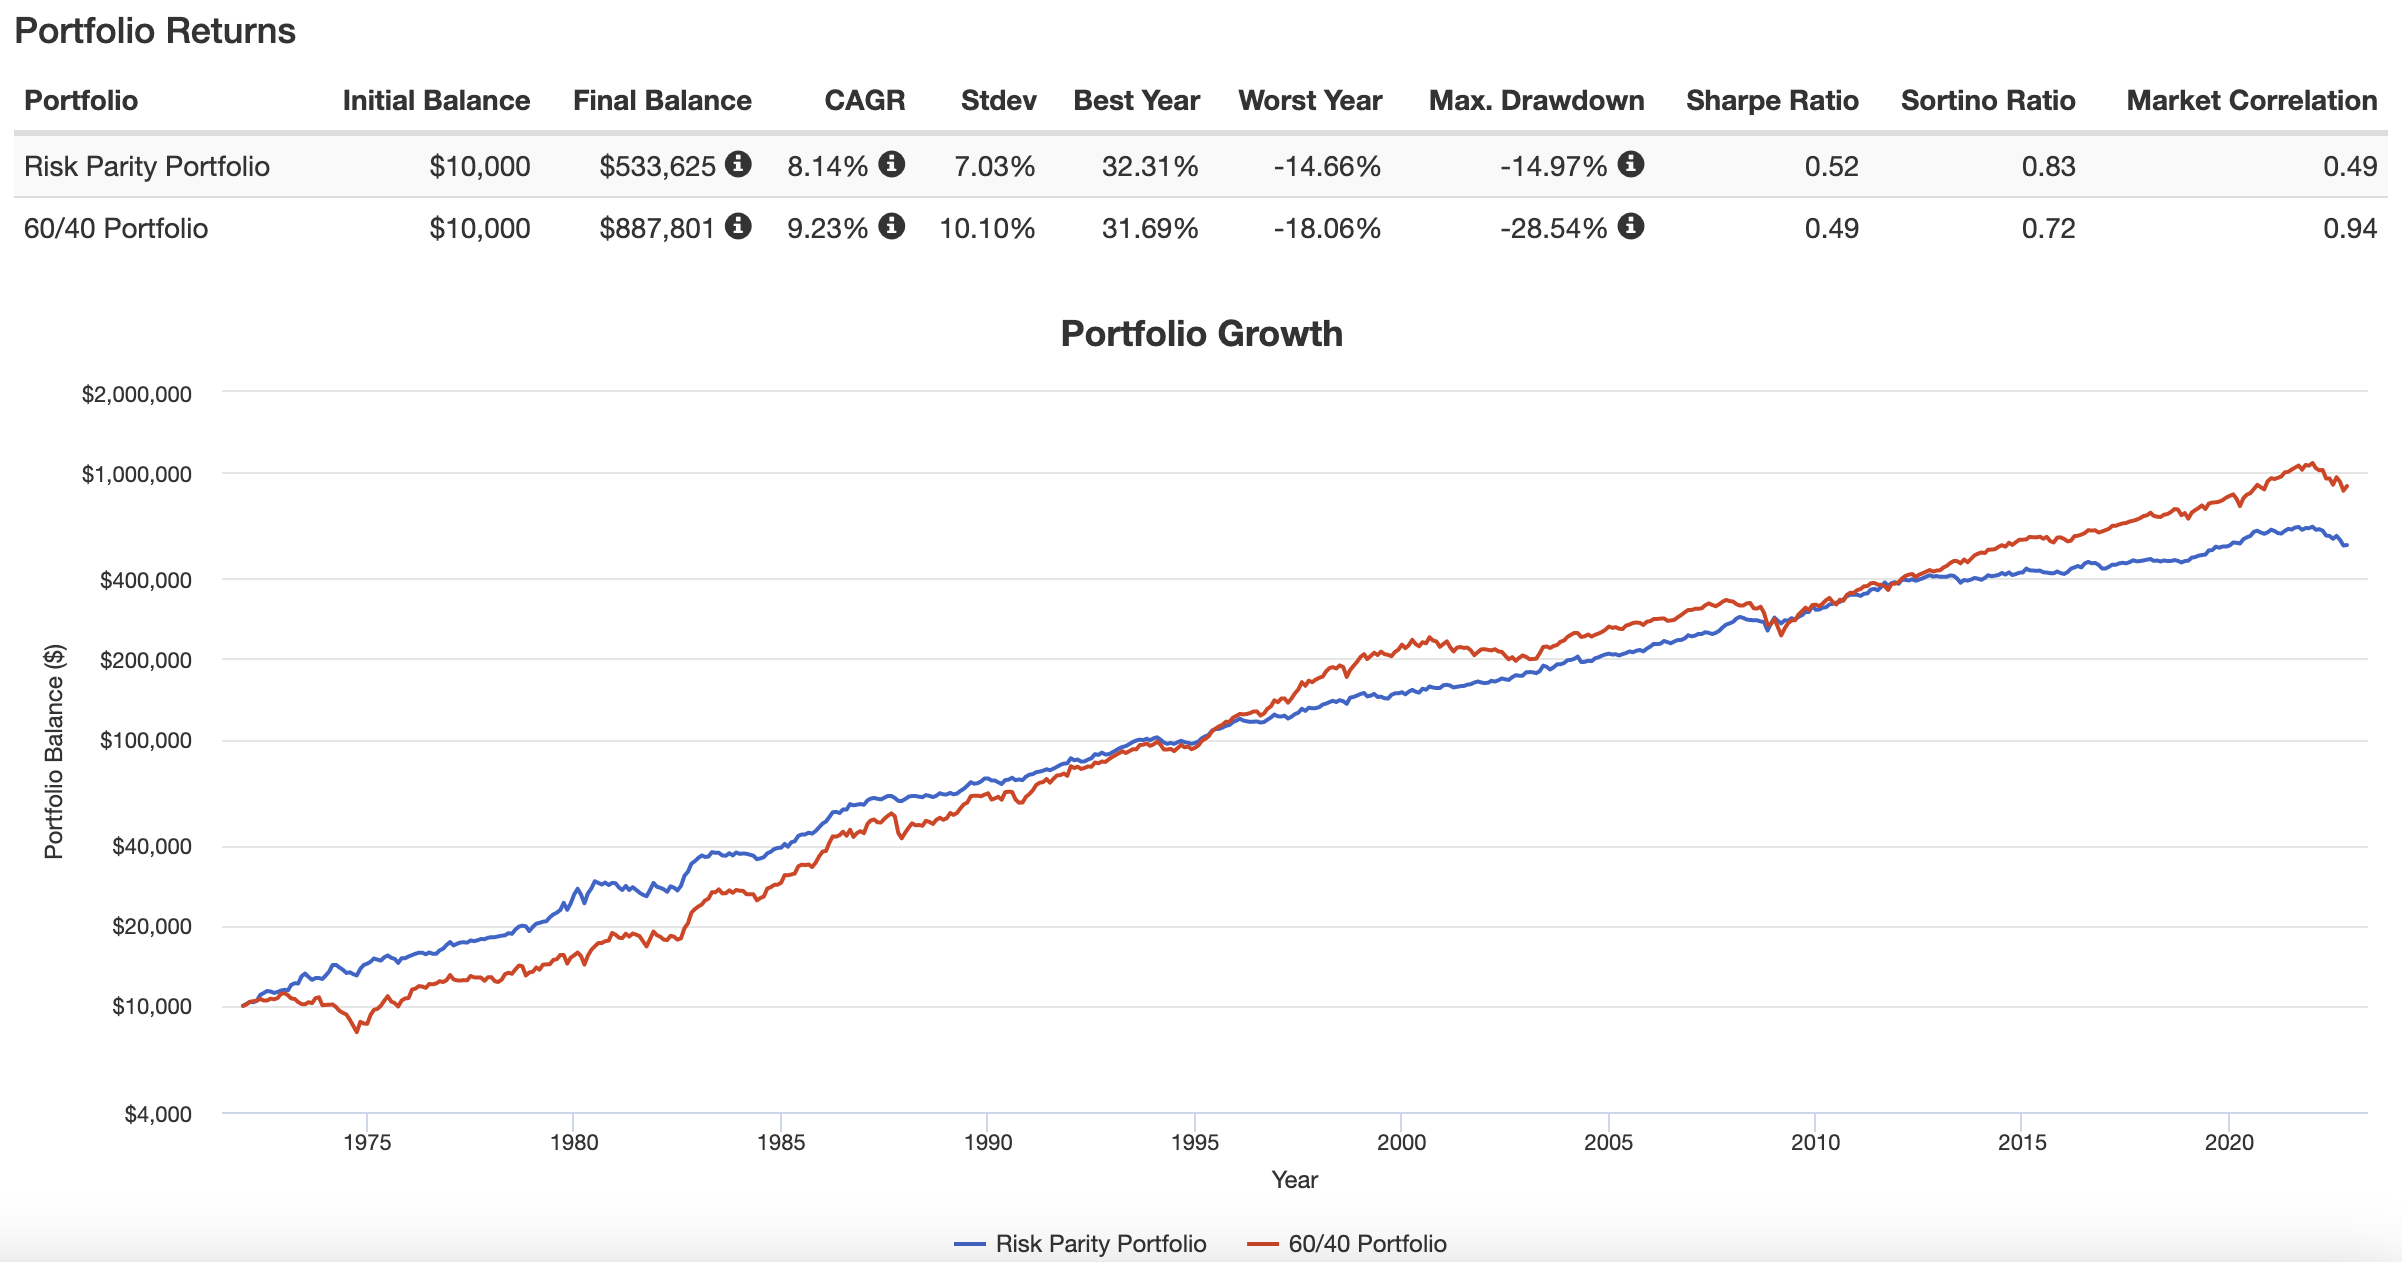 Risk Parity Portfolio vs 60/40 Portfolio historical returns from 1972 until 2022